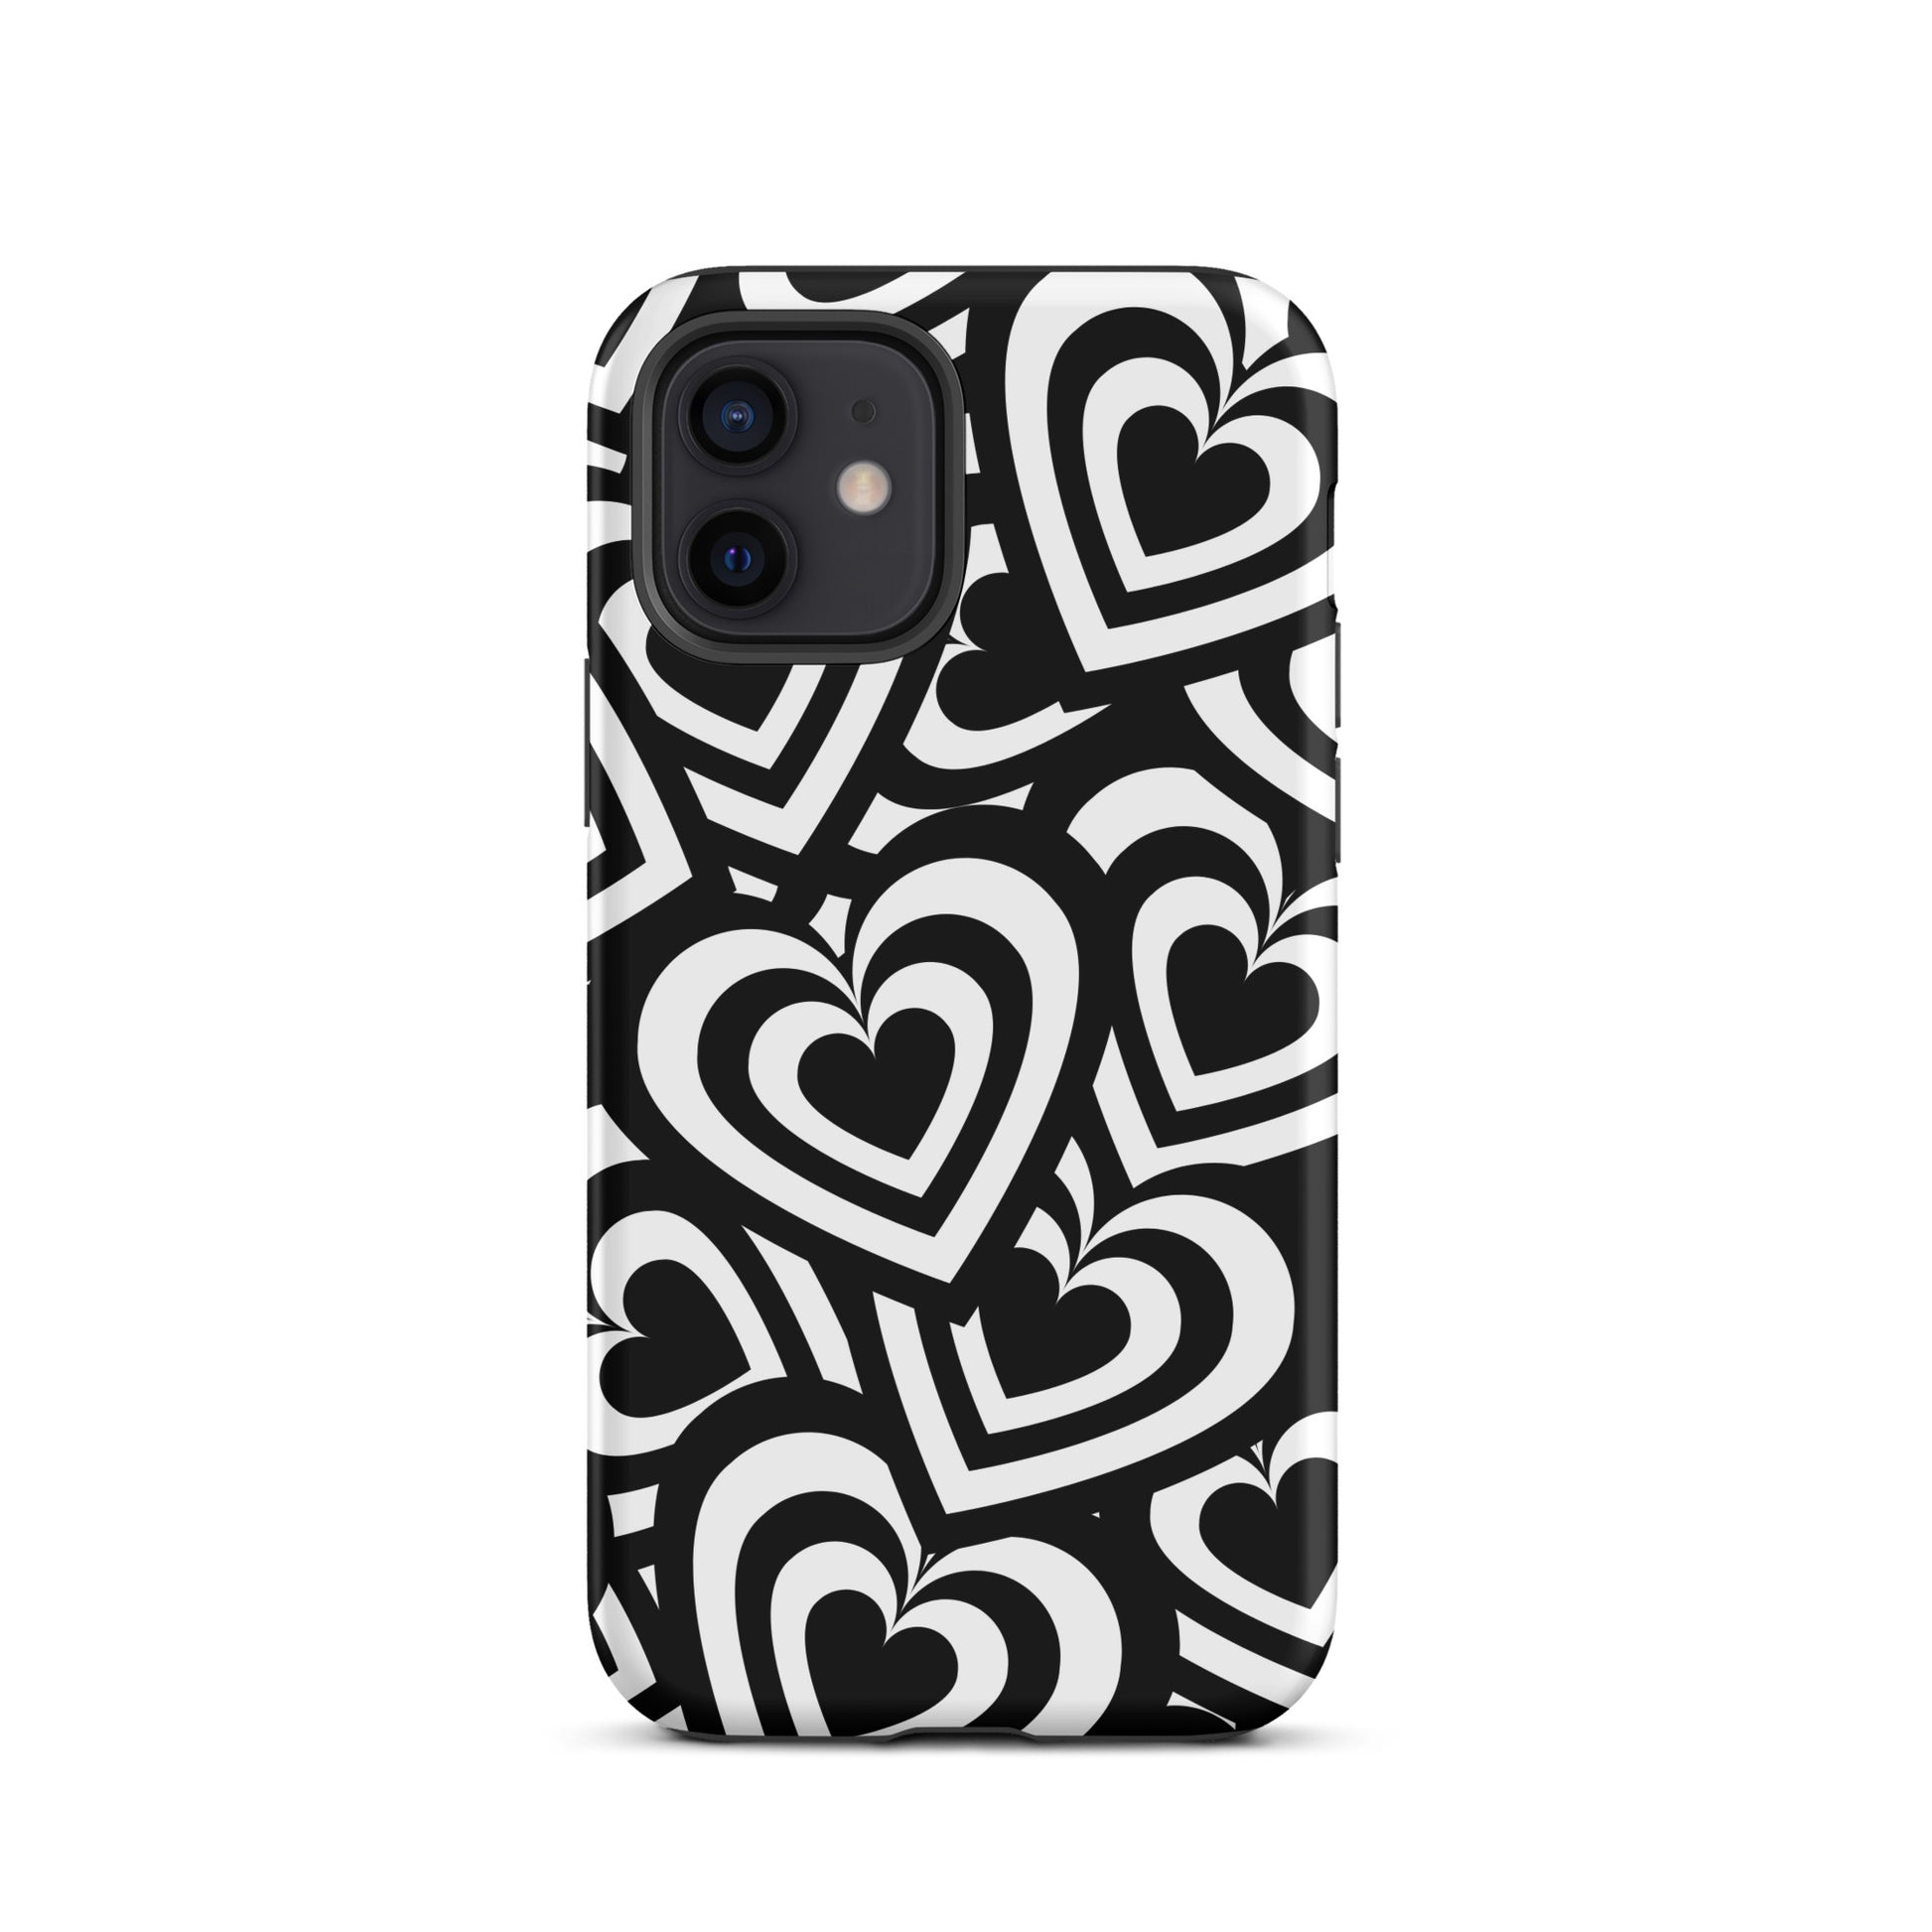 Black & White Hearts iPhone Case iPhone 12 Matte